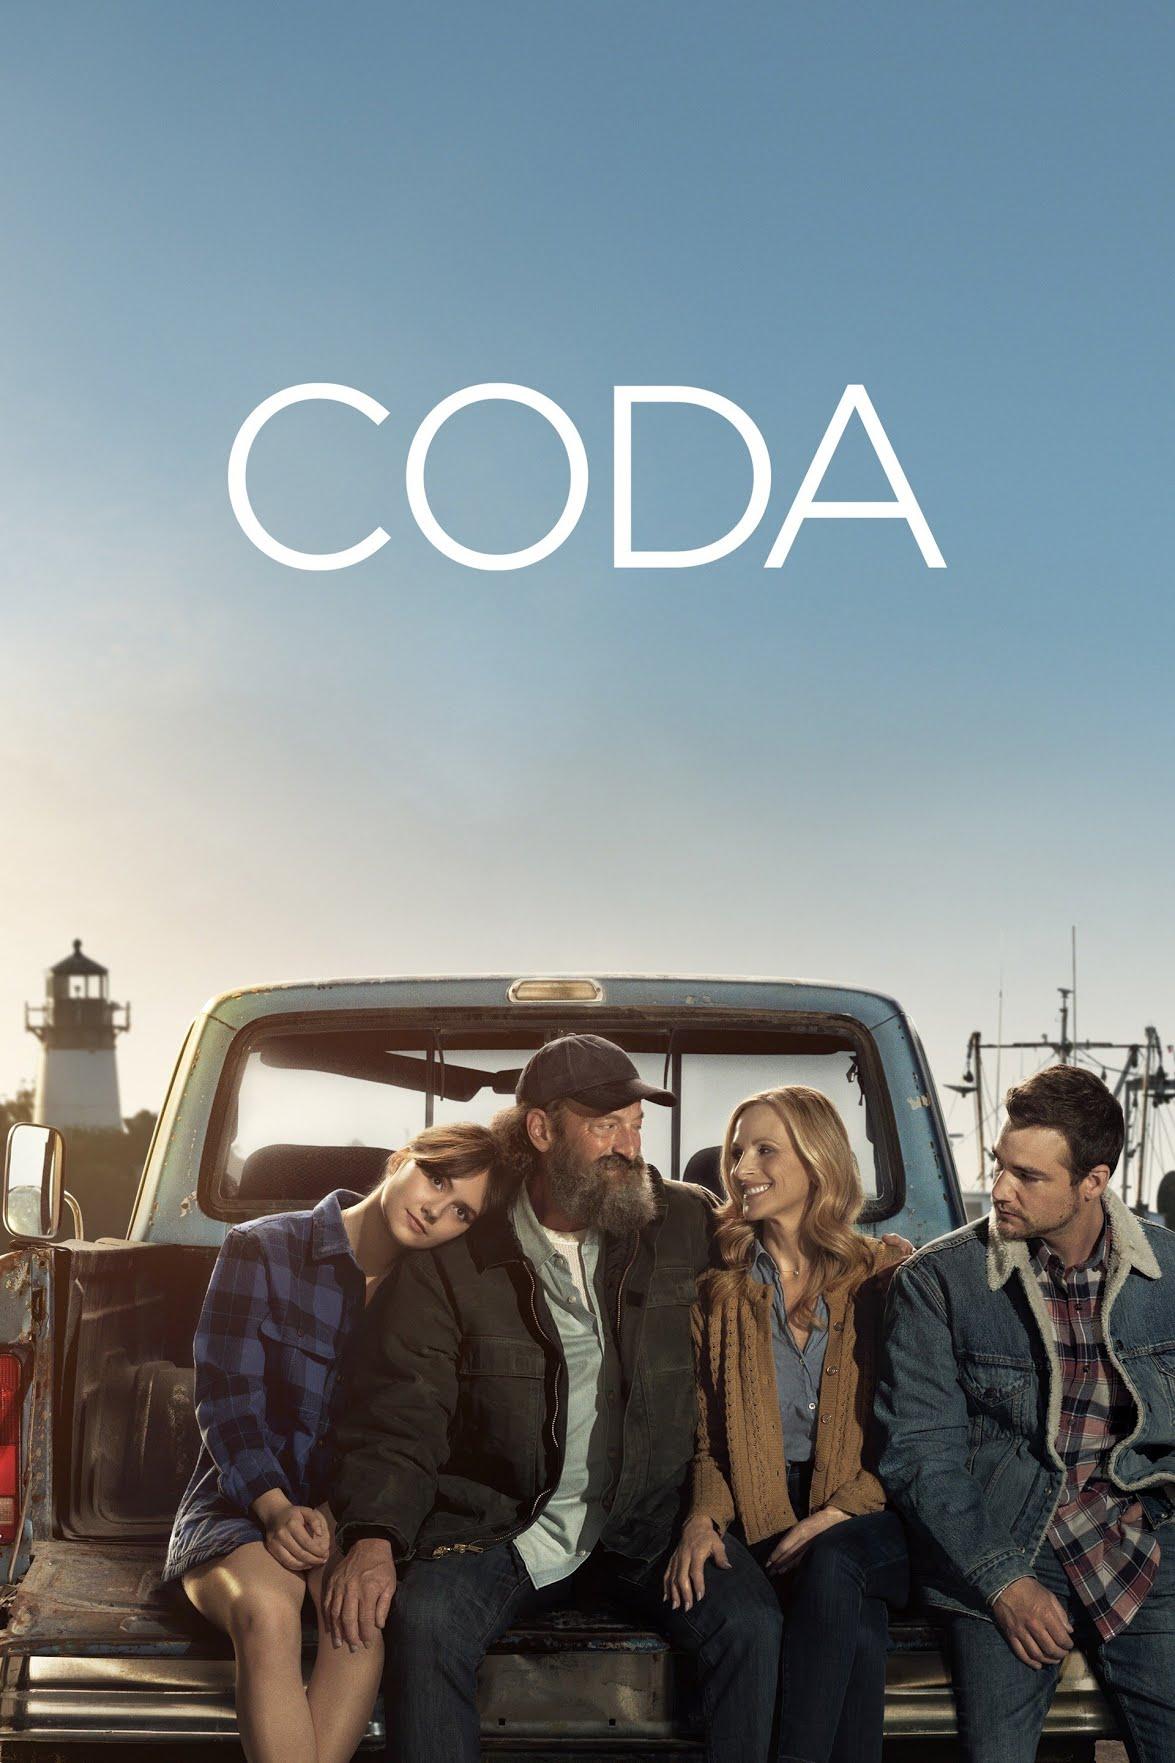 coda movie review by deaf community